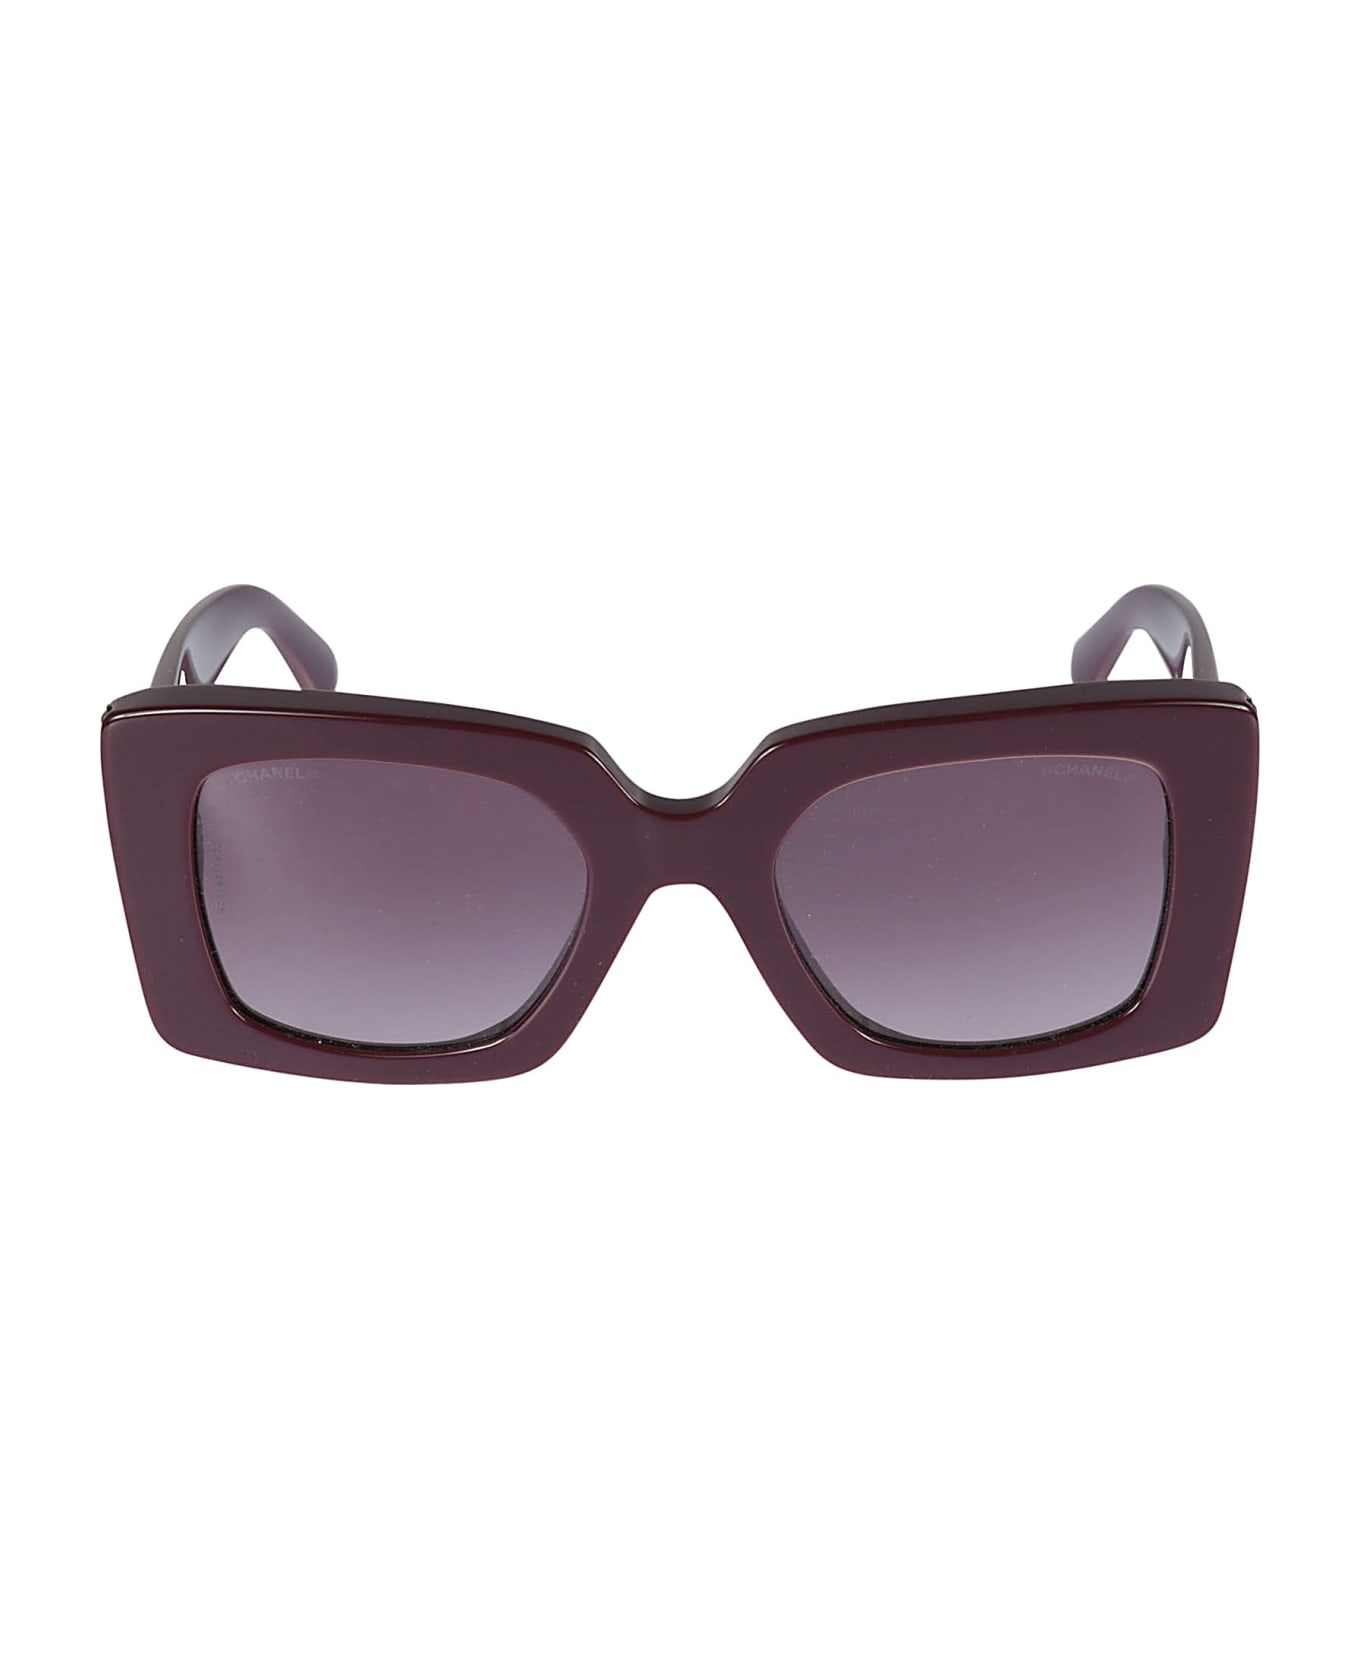 Chanel Square Sunglasses - Burgundy